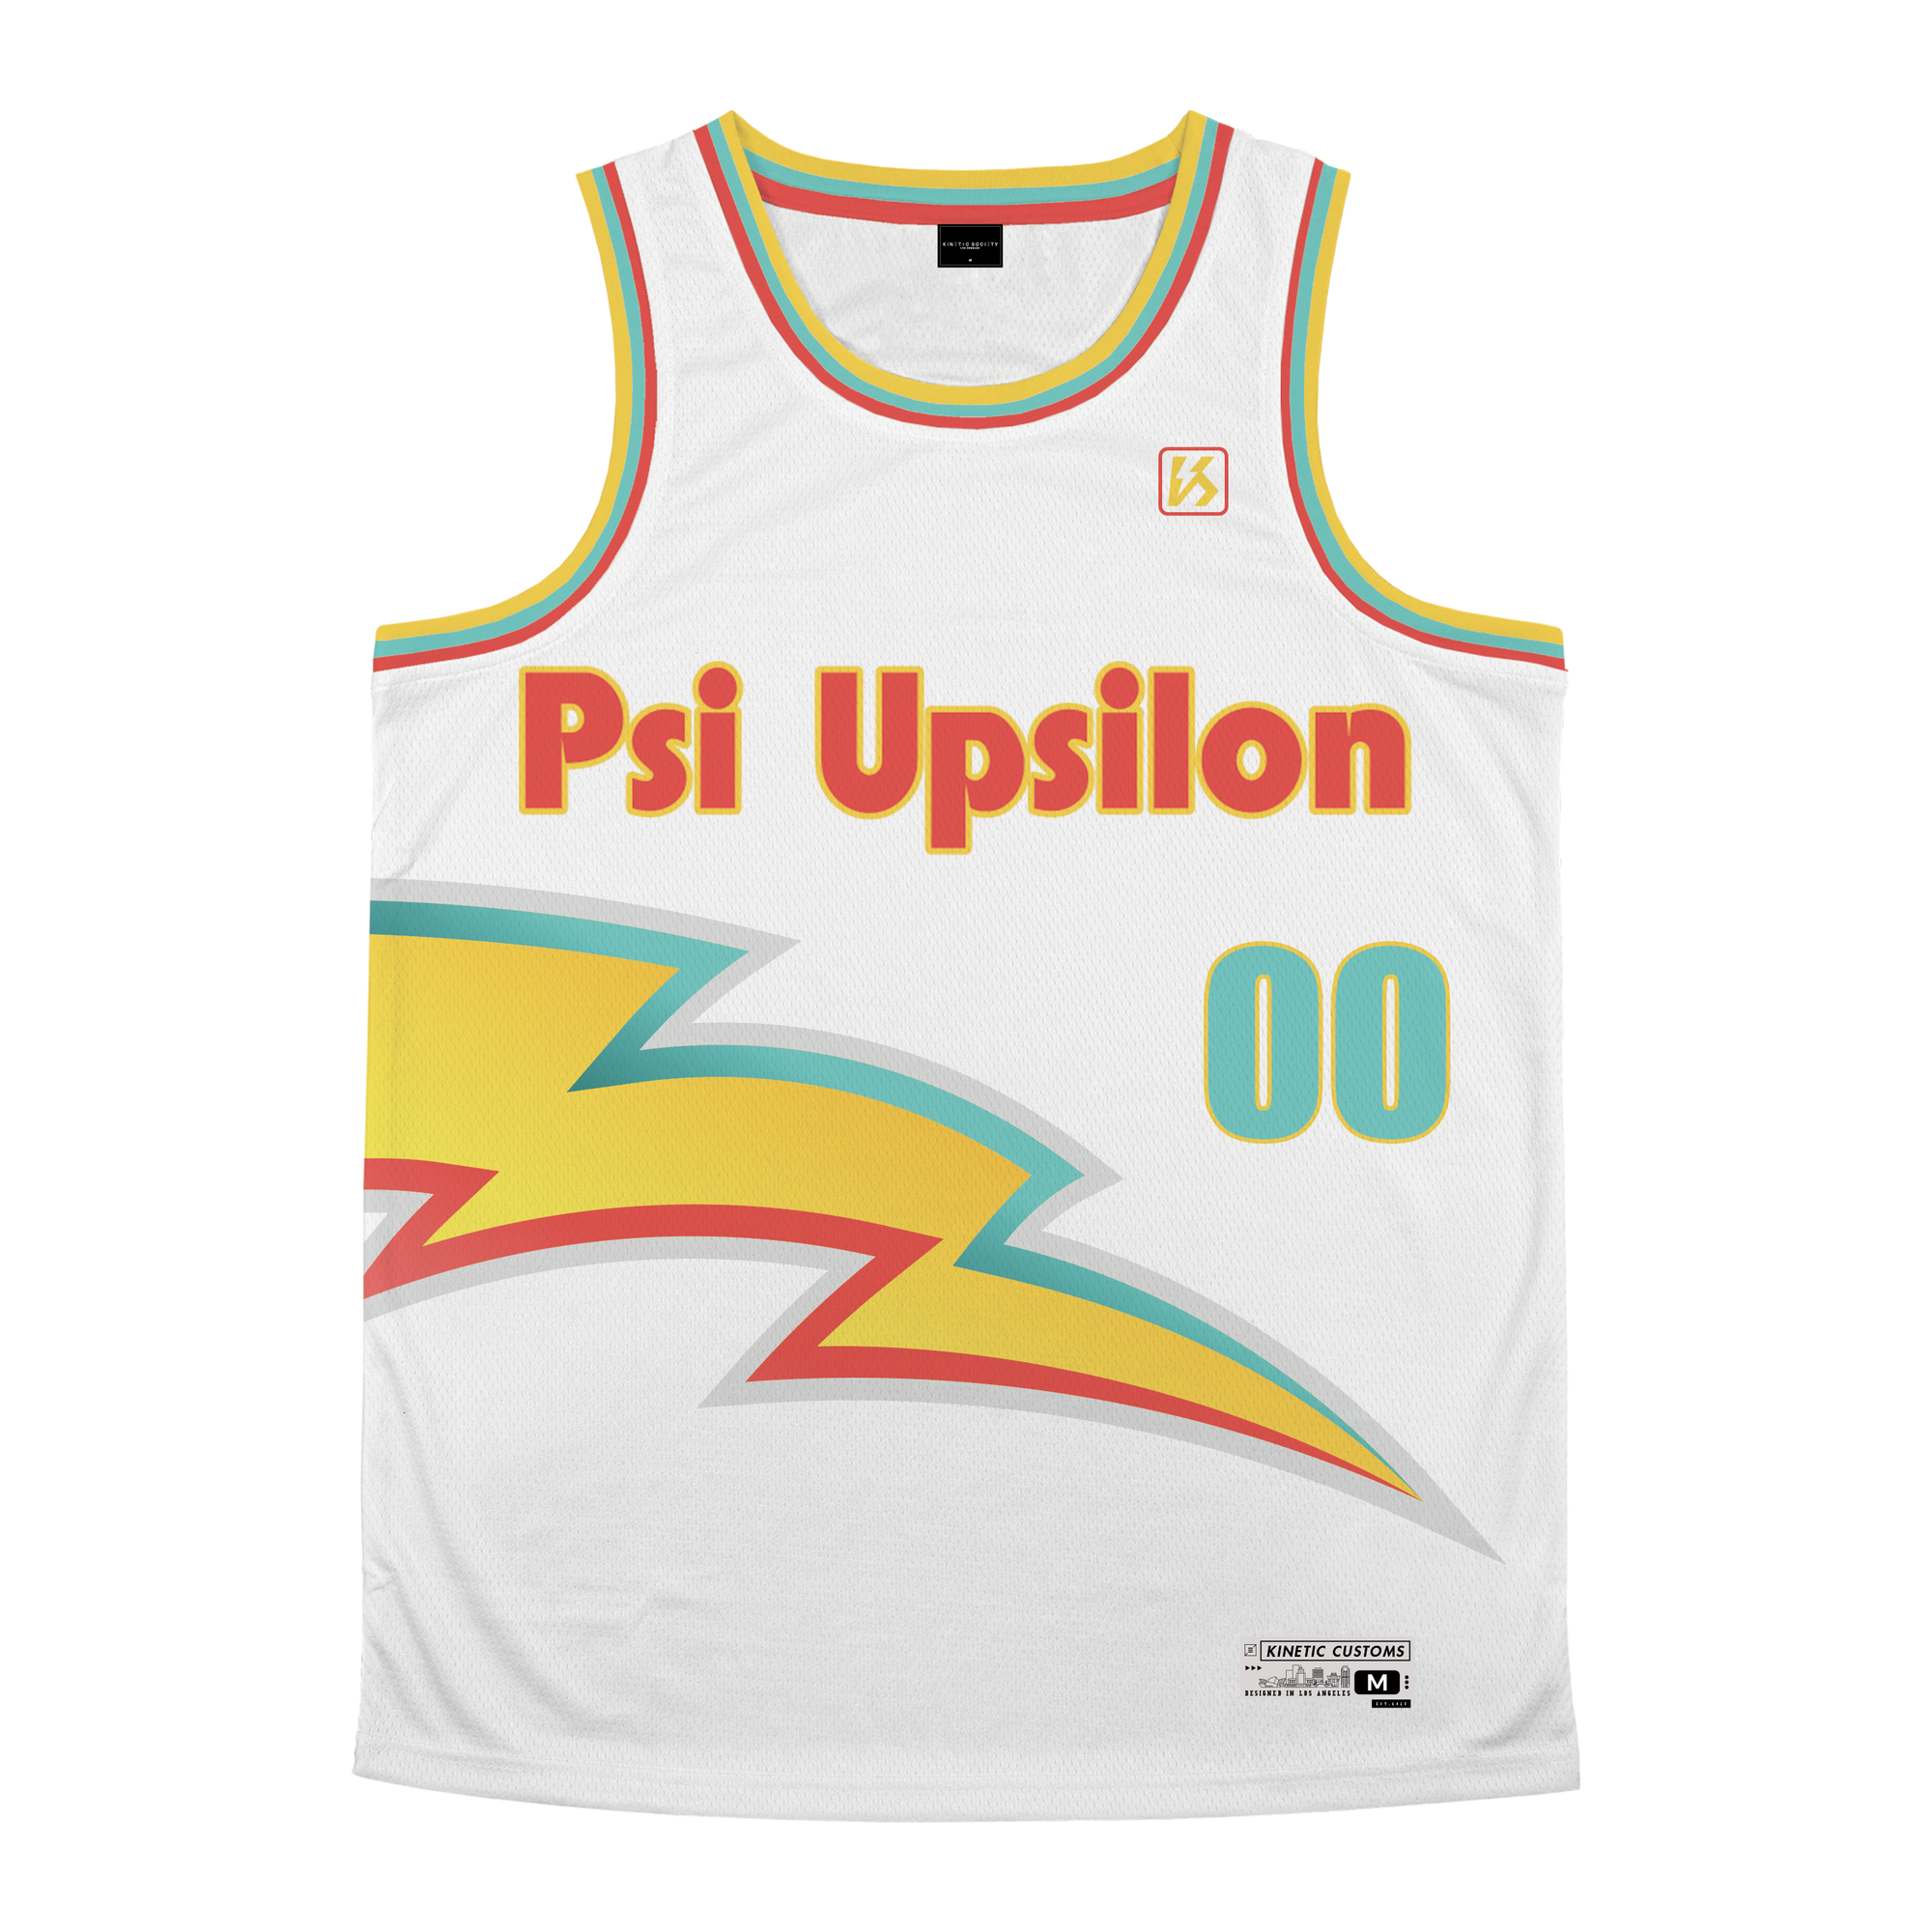 Psi Upsilon - Bolt Basketball Jersey